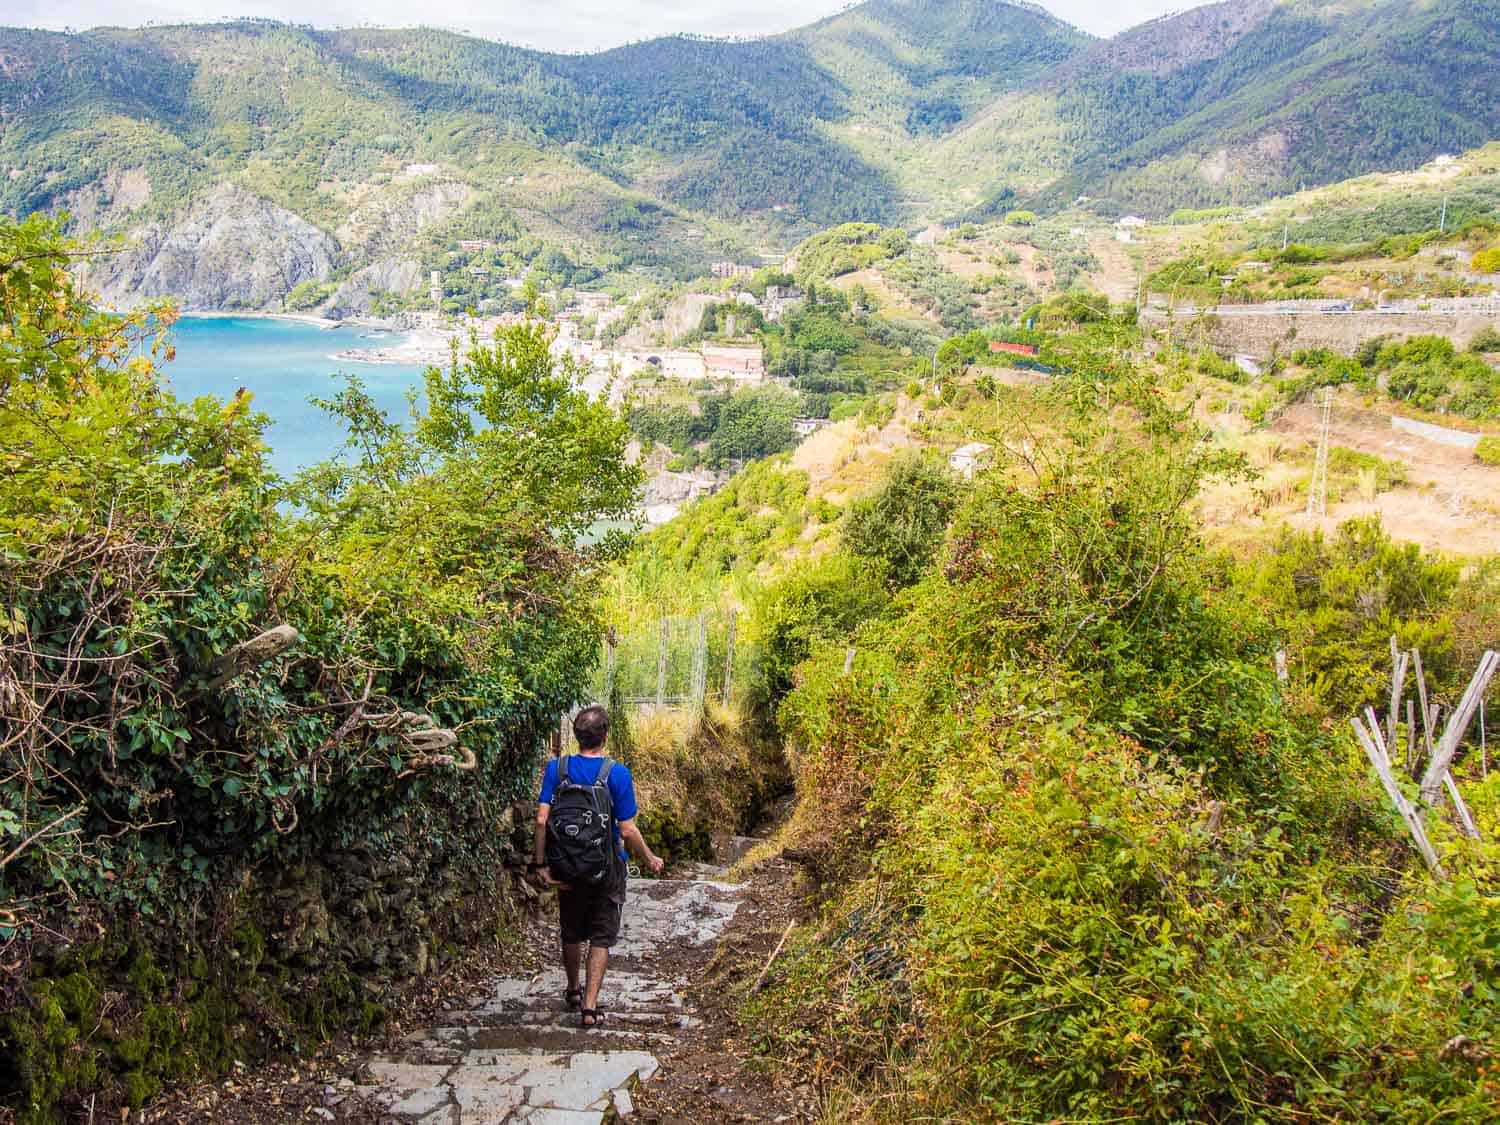 Hiking the Cinque Terre trail on the Italian Riviera